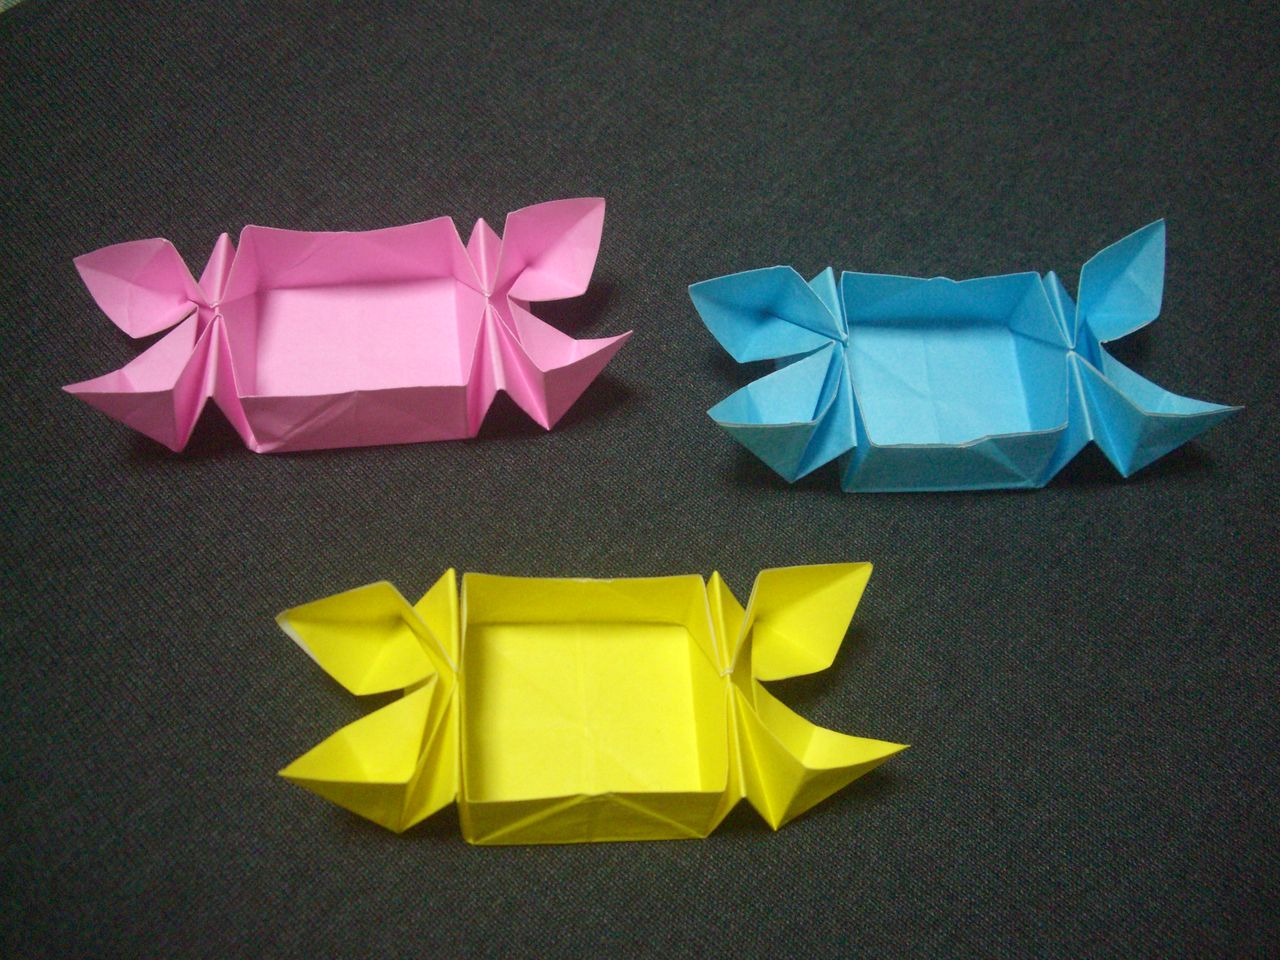 Ebisuchachaのブログ Origami 折り紙